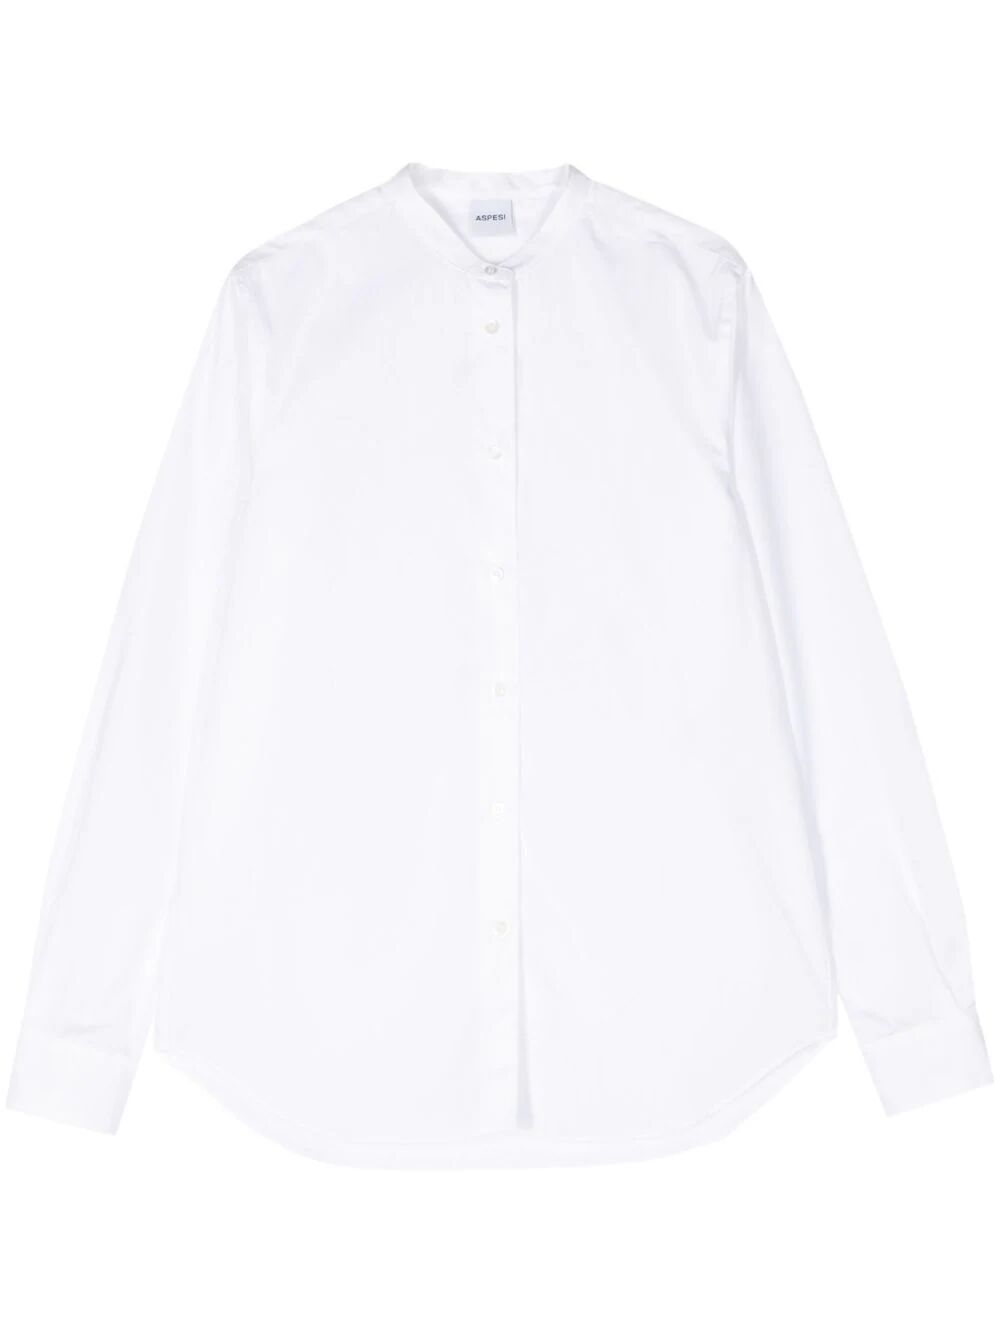 Aspesi Mod 5416 Shirt In White